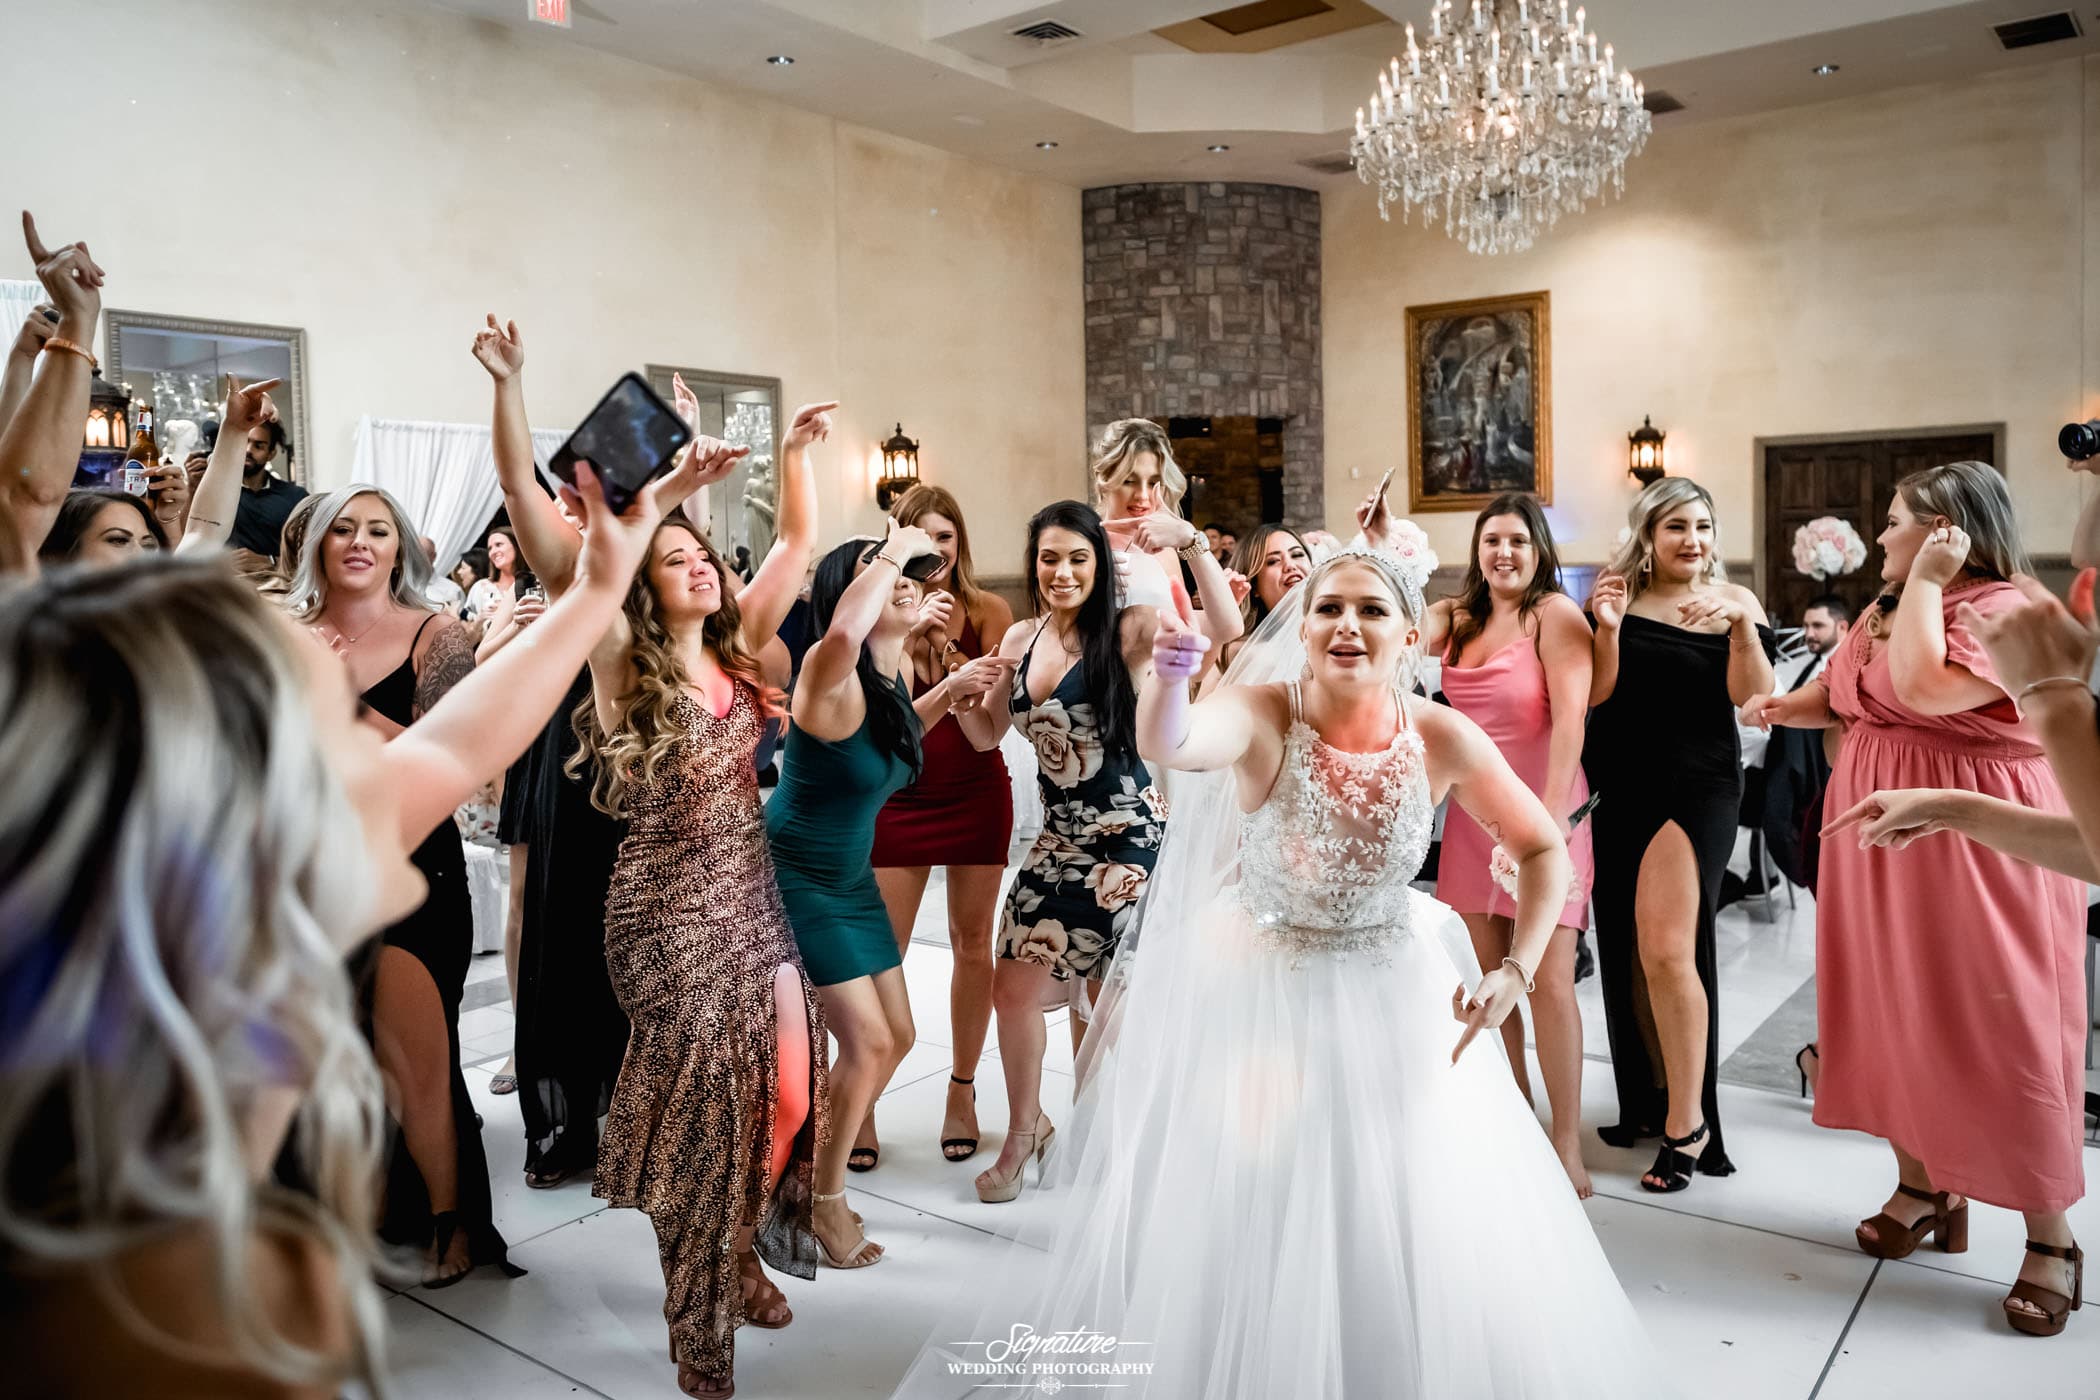 Bride dancing with wedding guests at reception